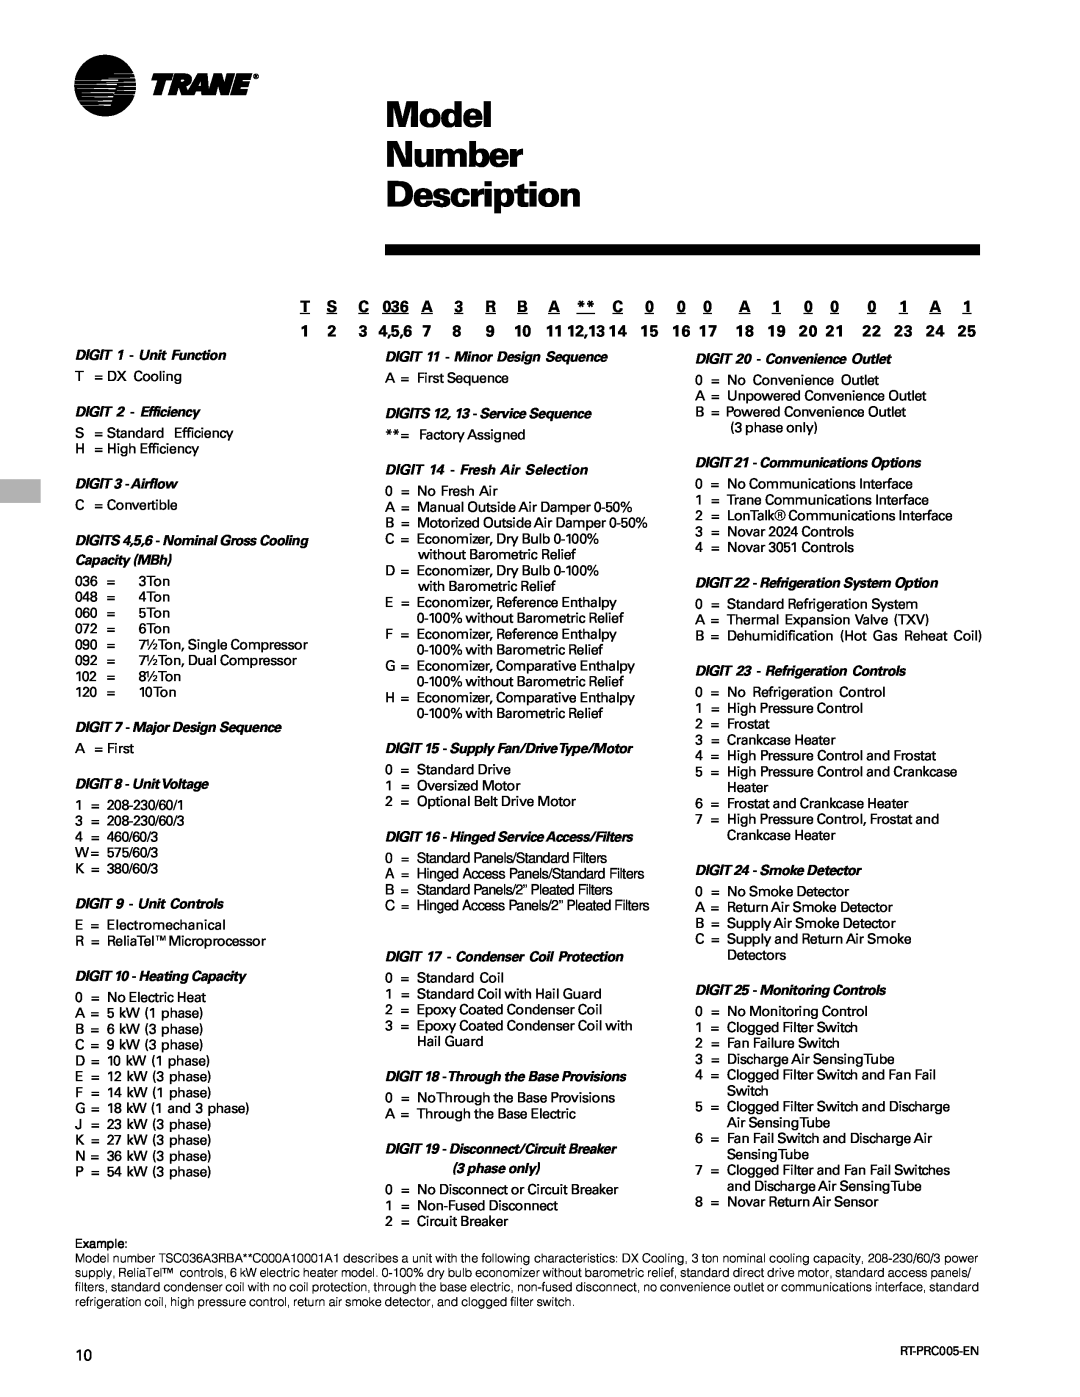 Trane RT-PRC005 manual Model Number Description 